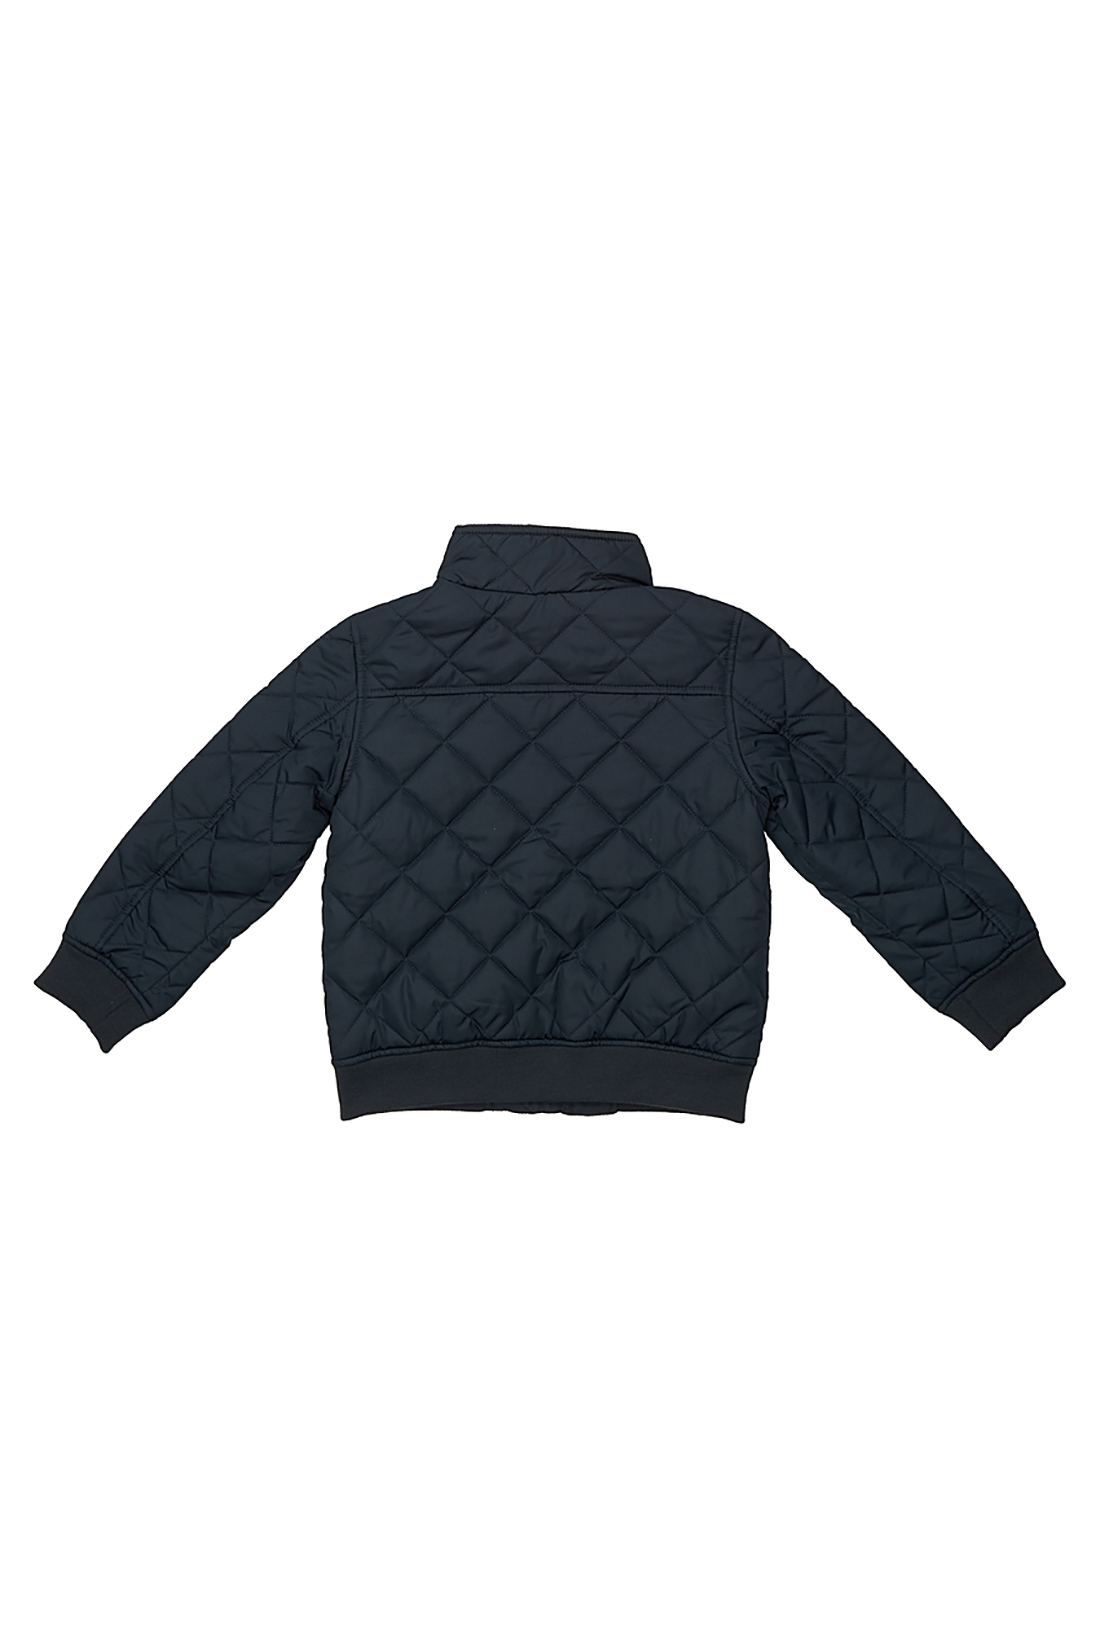 Куртка для мальчика (арт. baon BK538005), размер 98-104, цвет синий Куртка для мальчика (арт. baon BK538005) - фото 3